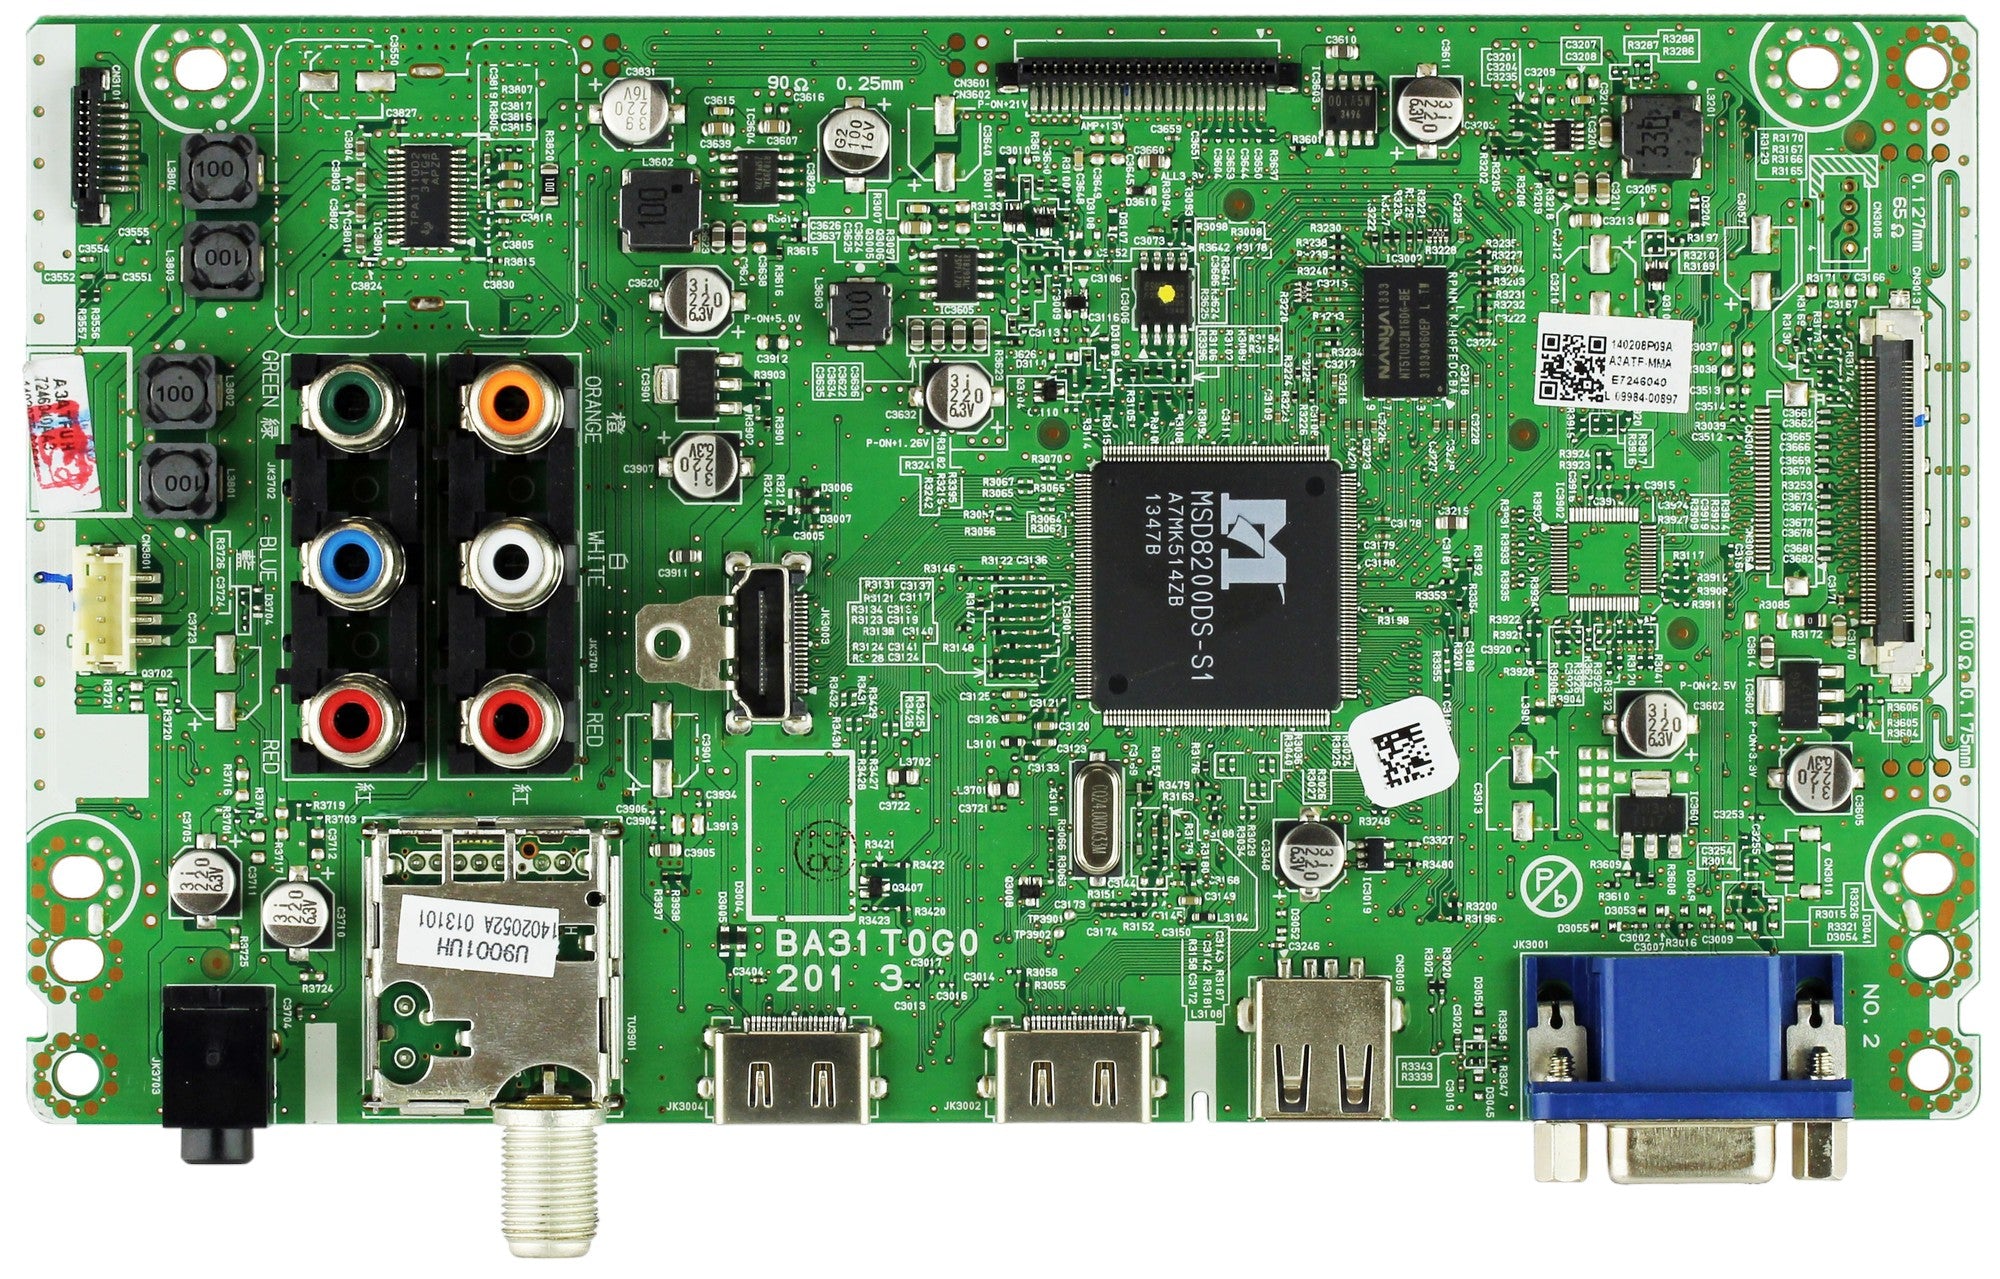 Magnavox A3ATFMMA-001 Digital Main Board for 39ME313V/F7